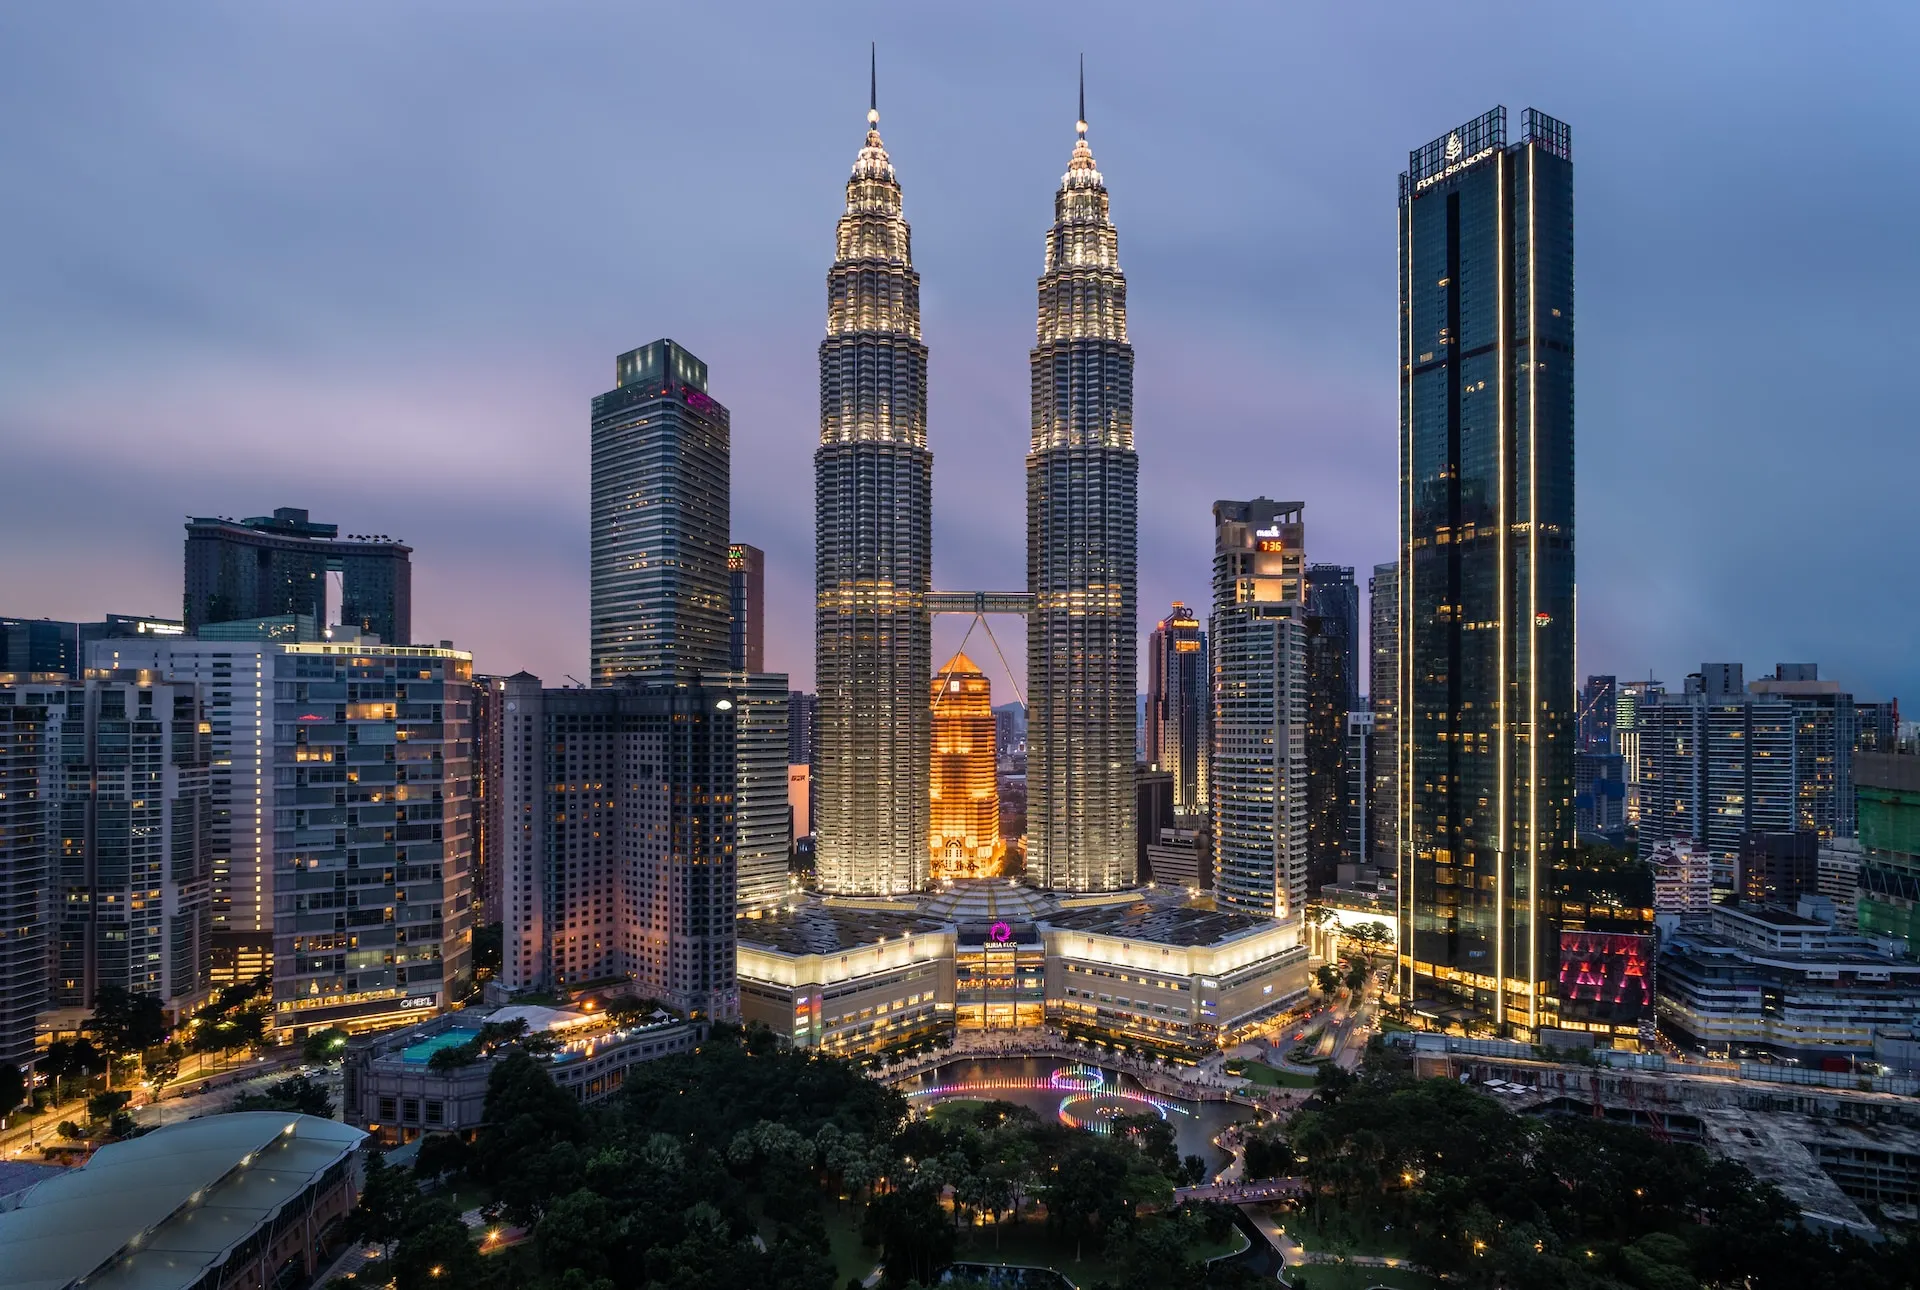 Petronas Twin Towers, Source: Photo by Esmonde on Unsplash